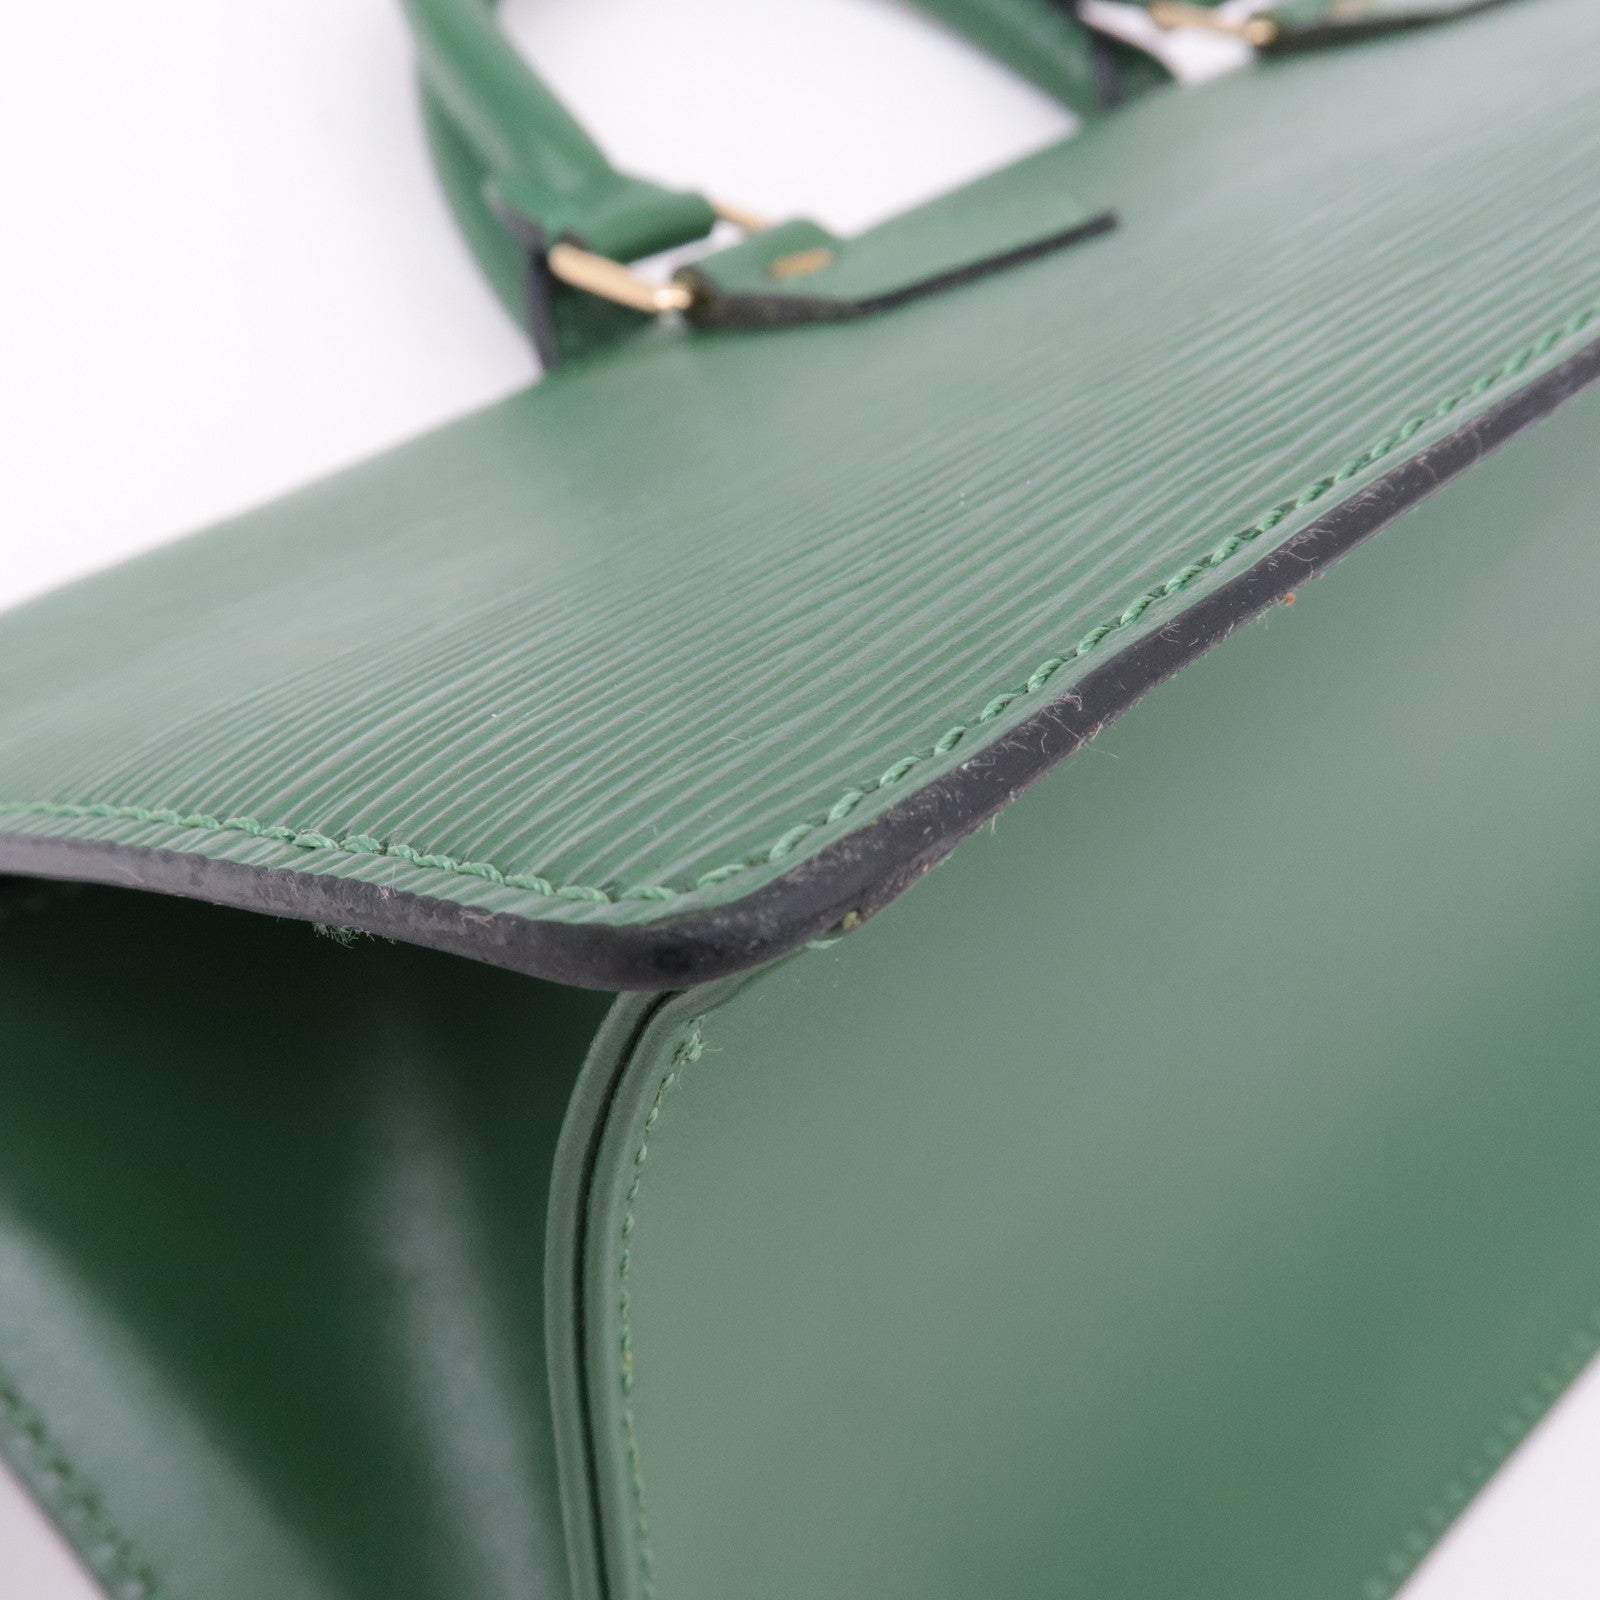 Louis-Vuitton-Epi-Sac-Triangle-Hand-Bag-Borneo-Green-M52094 – dct